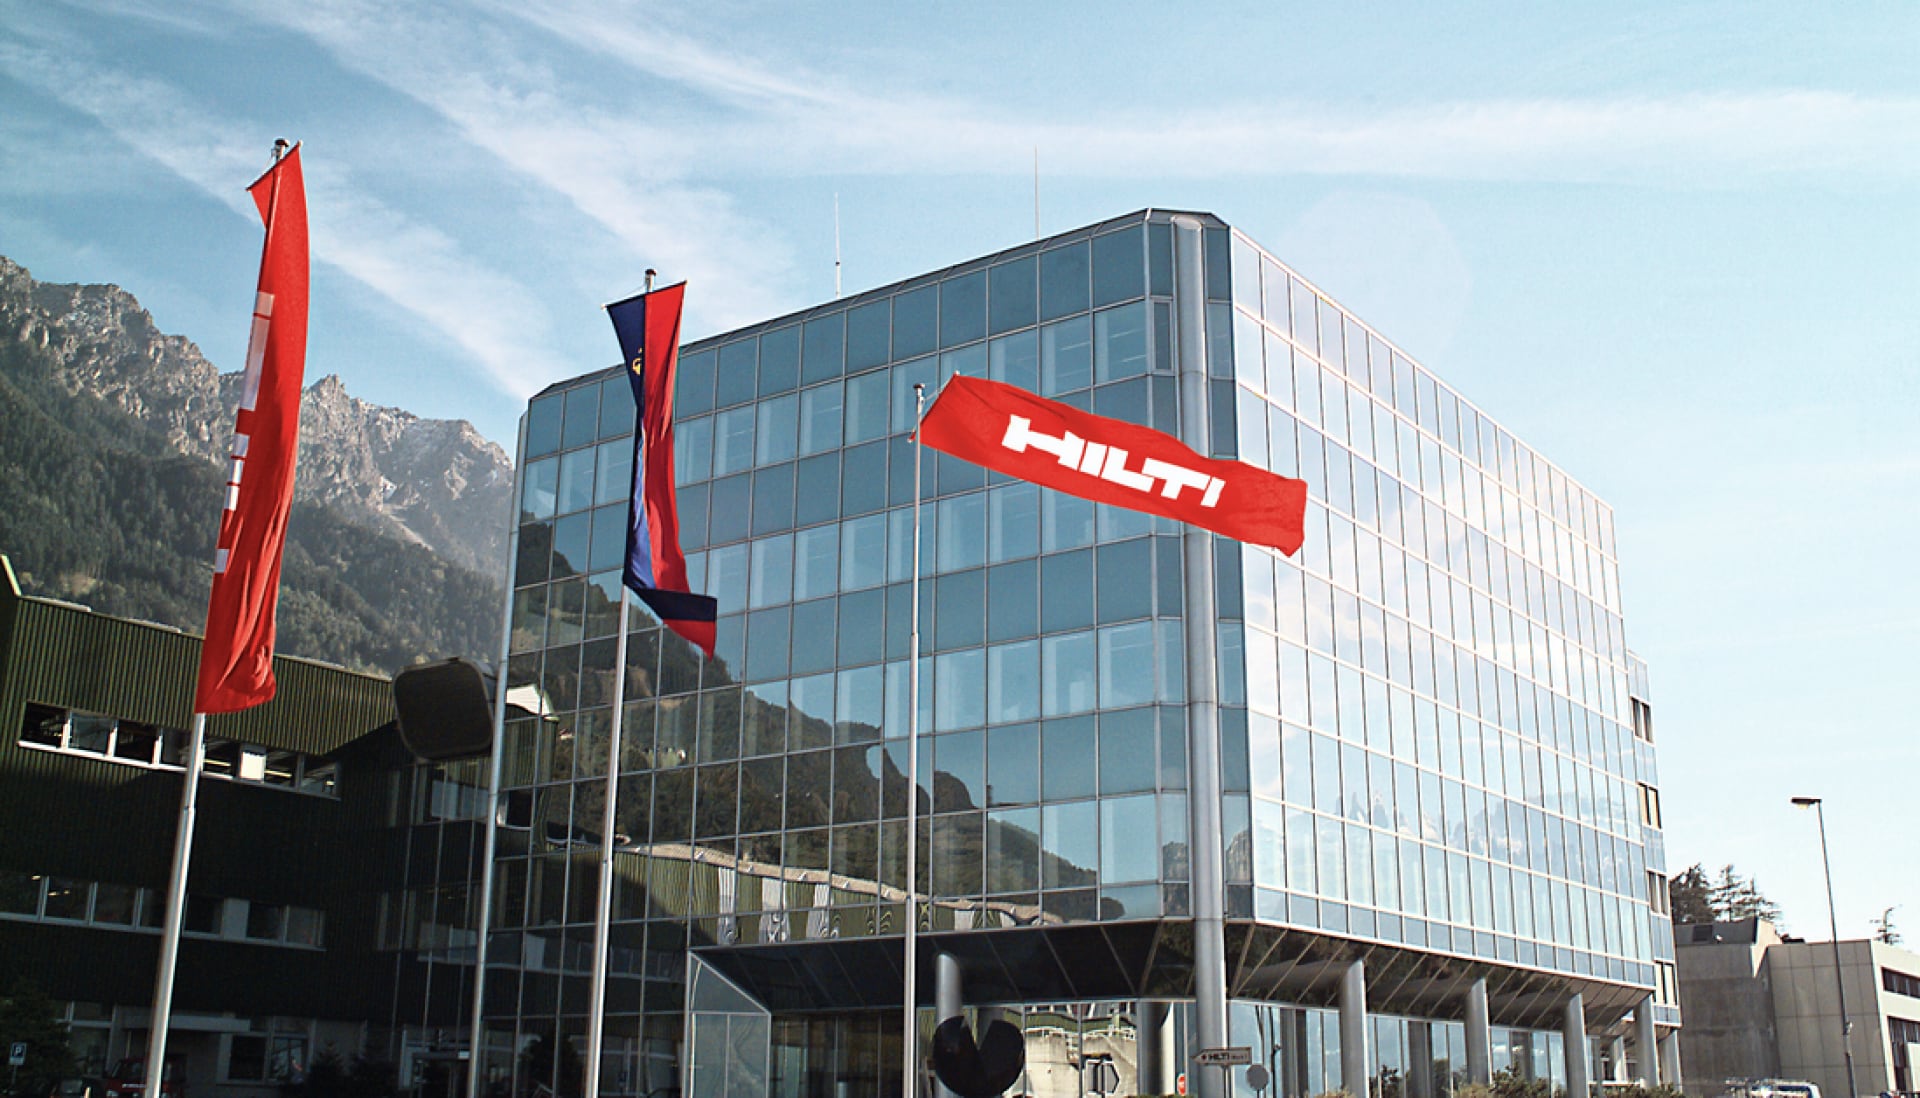 Hilti's global headquarters in Schaan, Liechtenstein